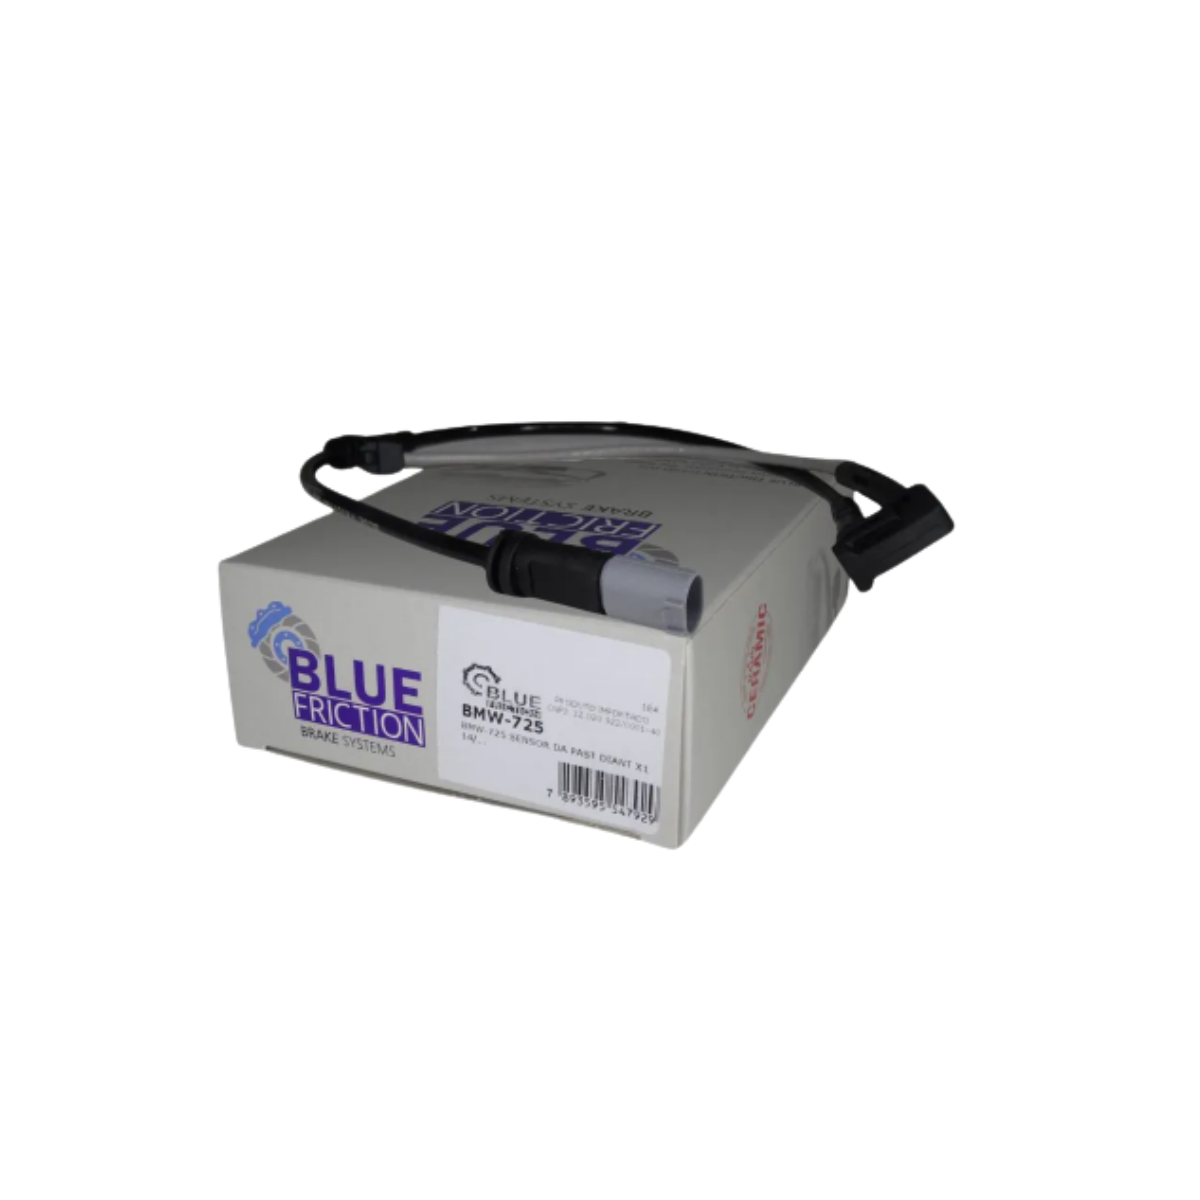 Sensor Desgaste Pastilha Mini Cooper Top A Partir De 2013 Dianteira Lado Esquerdo Blue Friction Bmw-725m New